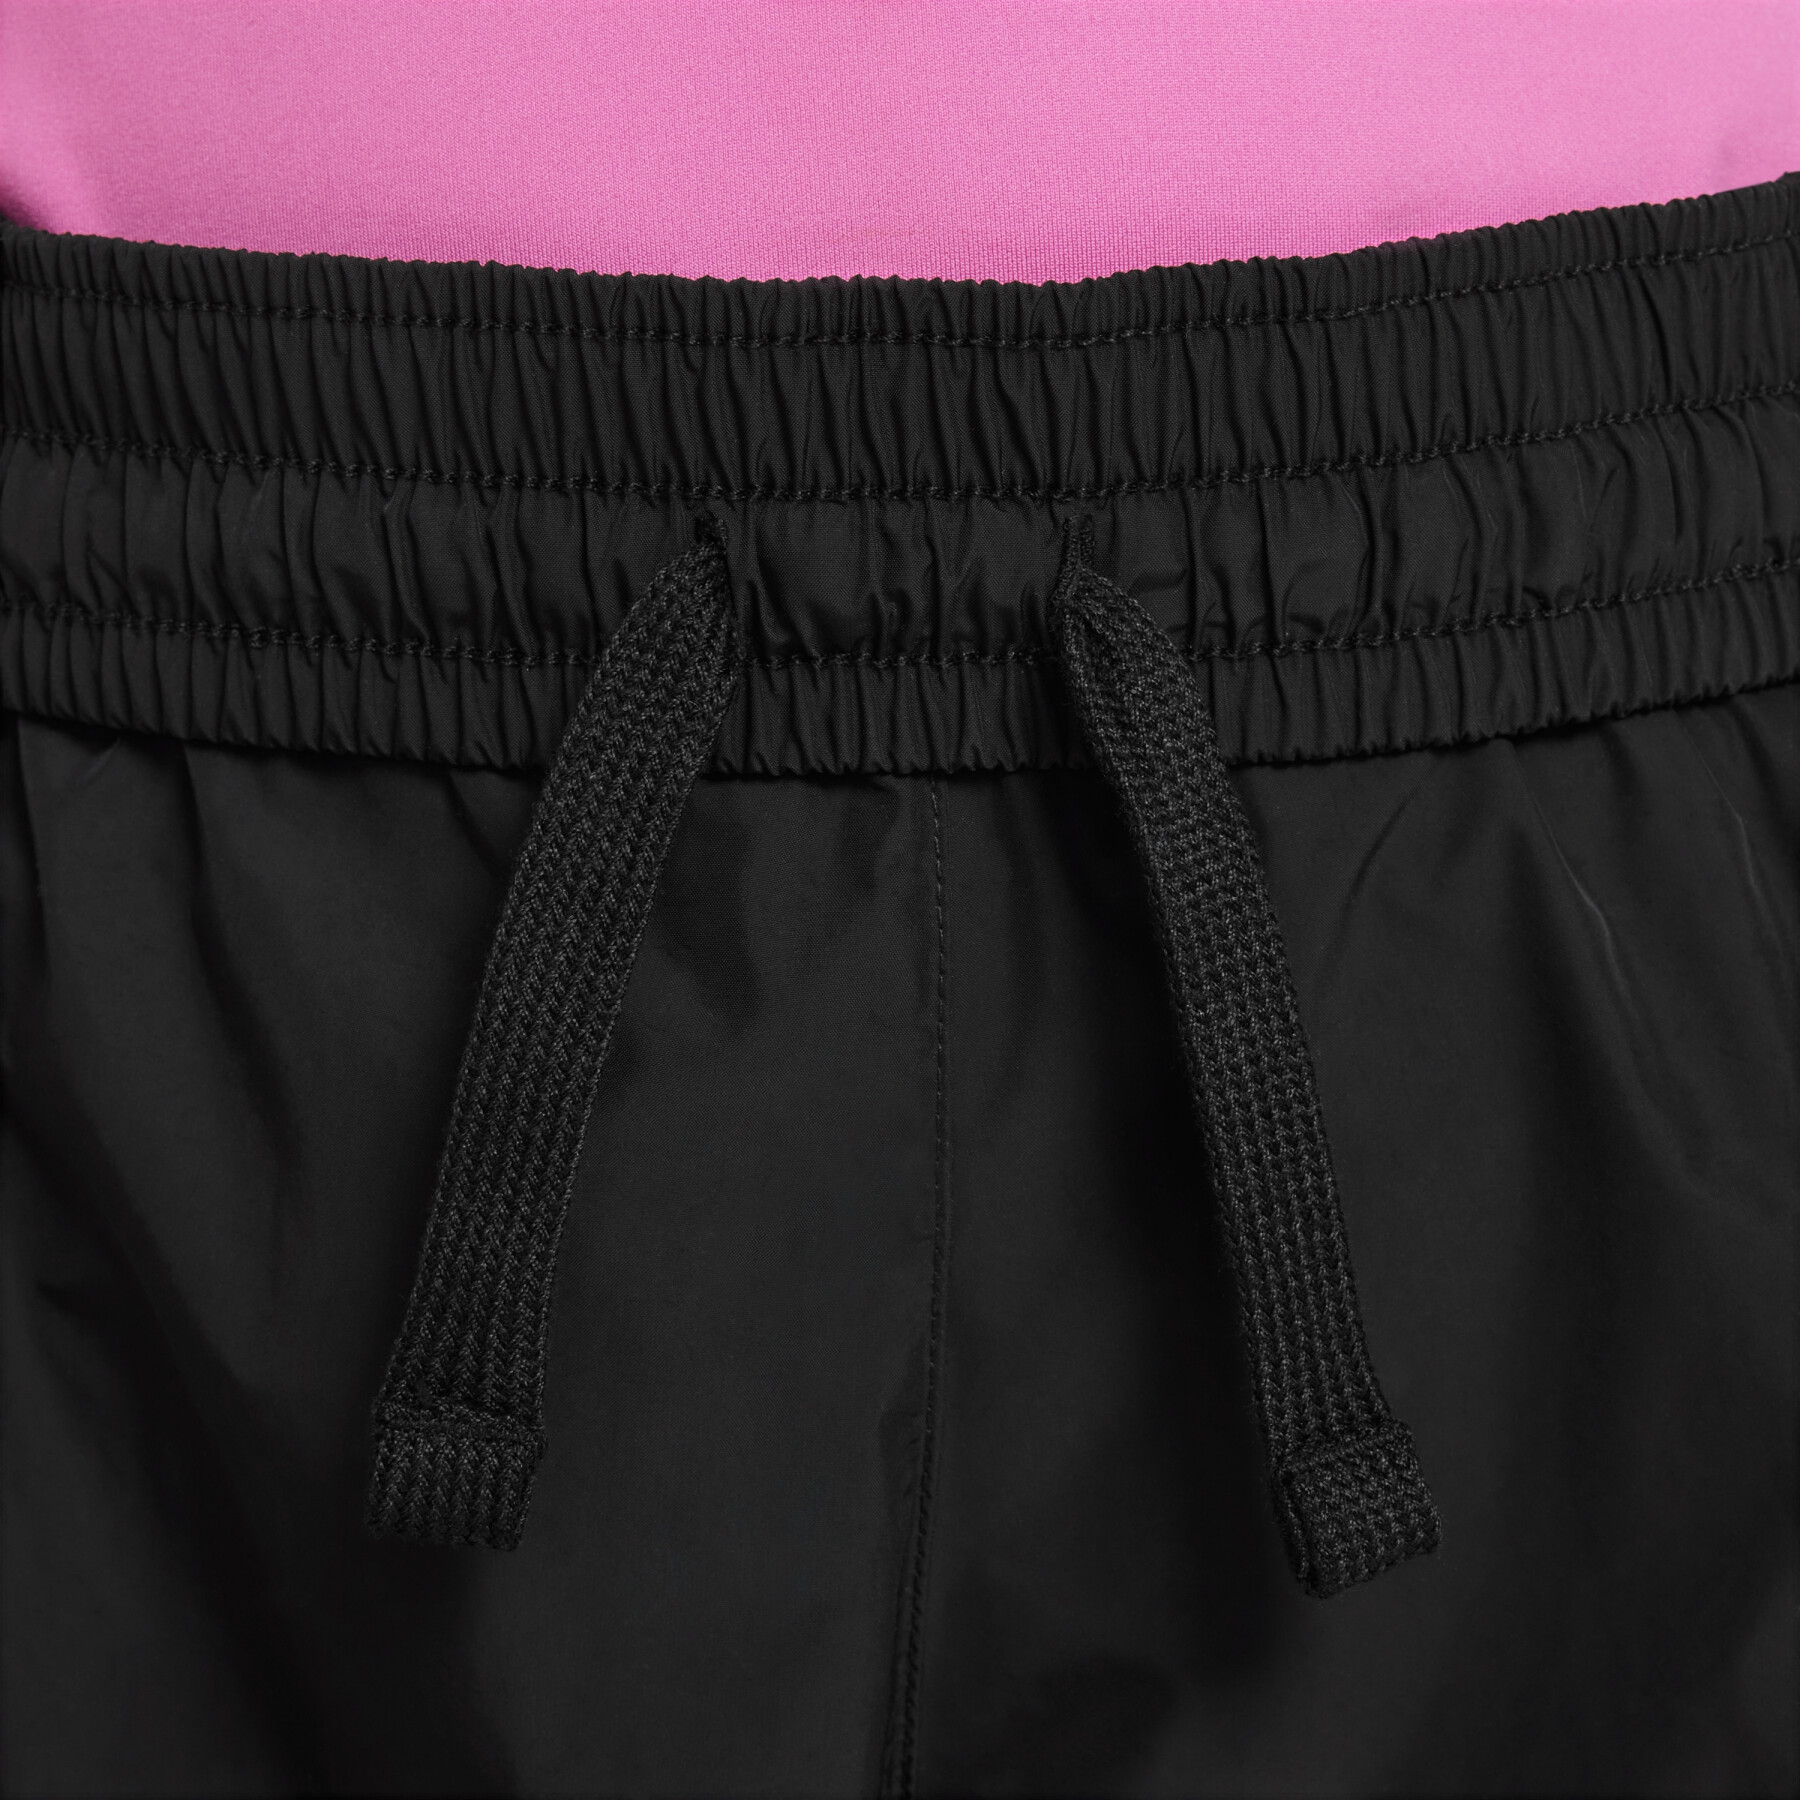 Girl's sweatpants Nike